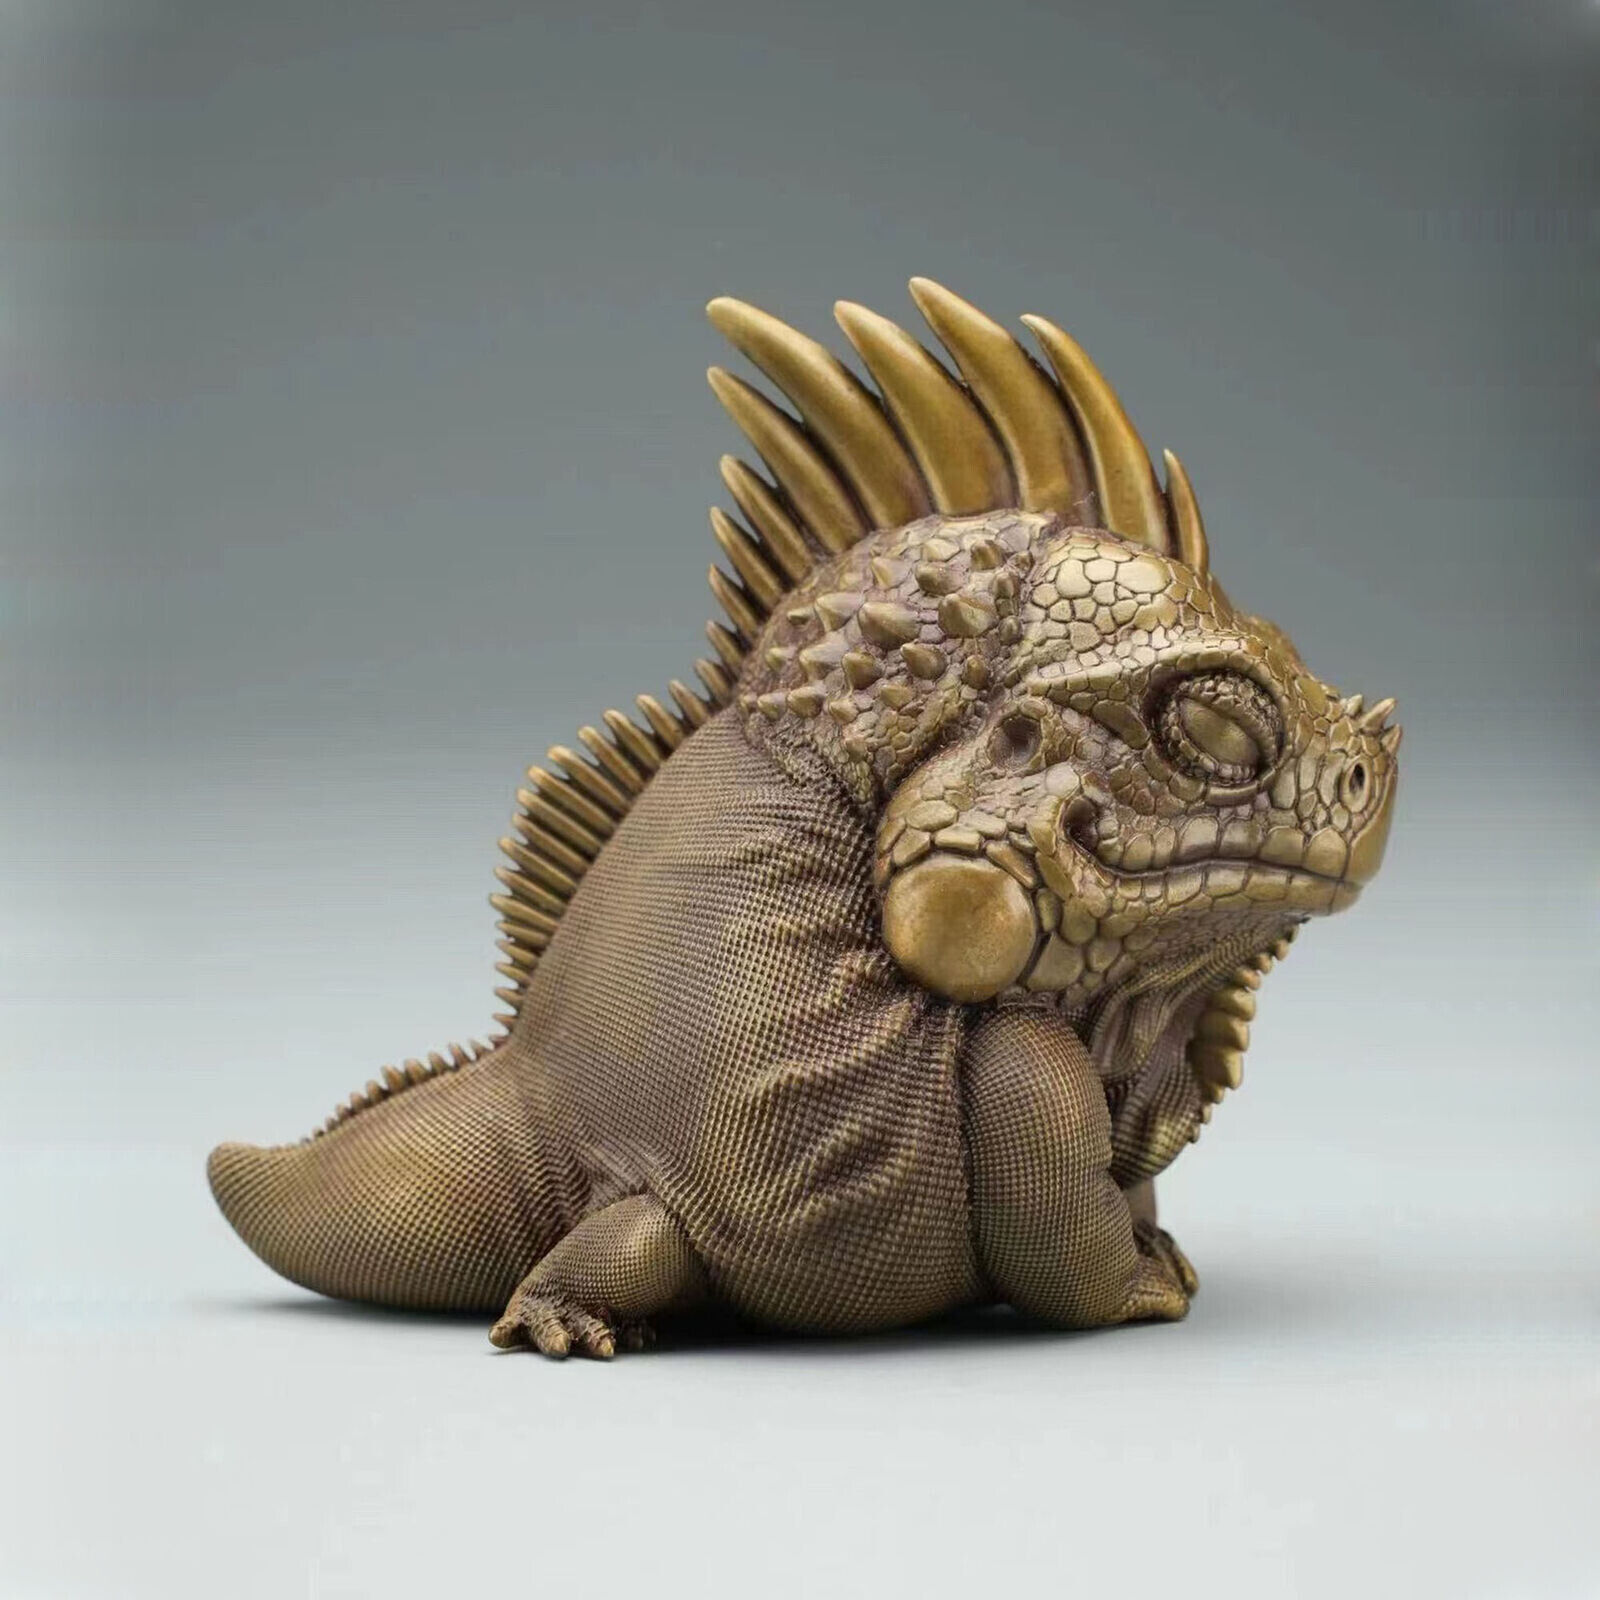 Fine Casting Bronze Iguana Figurine Crafts Decor,[Green Iguana] Collectible